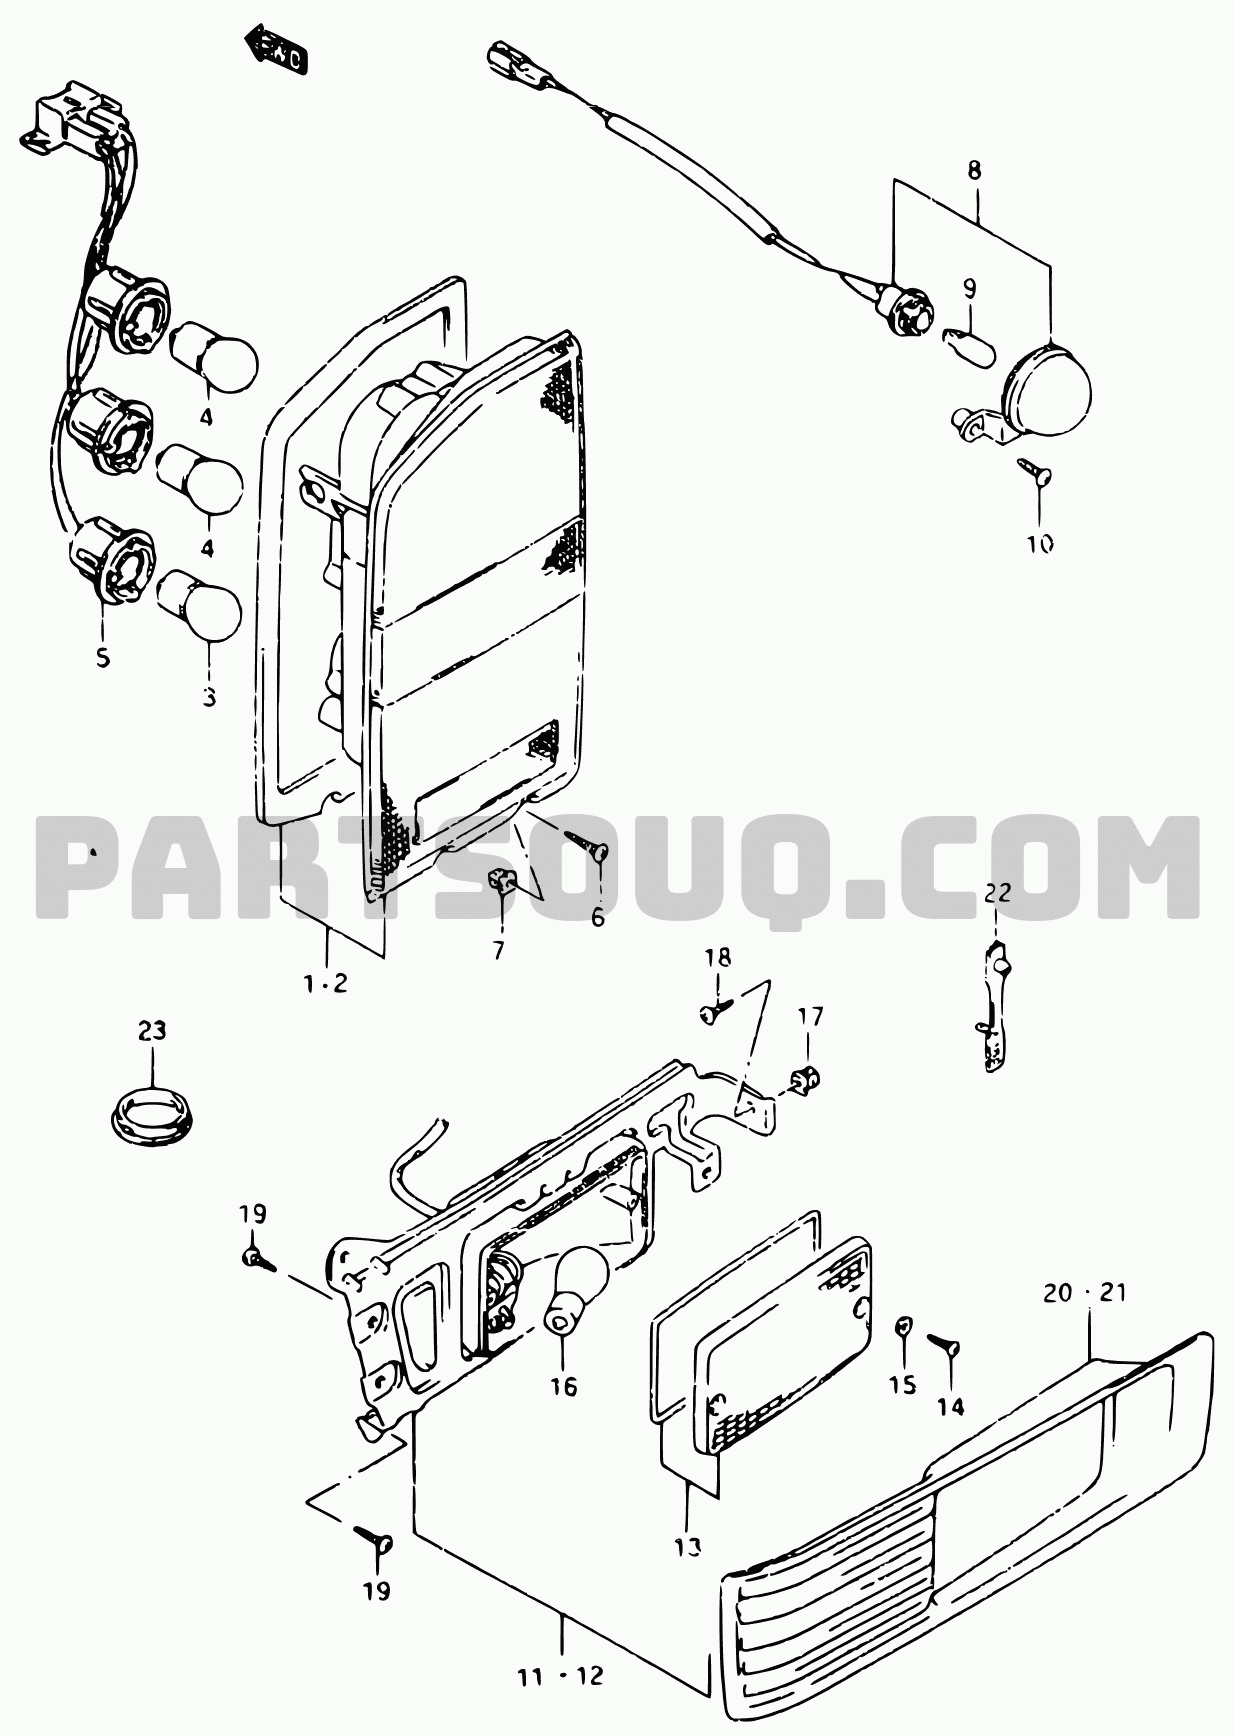 9. Electrical, Suzuki Vitara/Sidekick SE416 SE416 (MY:96, 5DR Santana)  Parts Catalogs